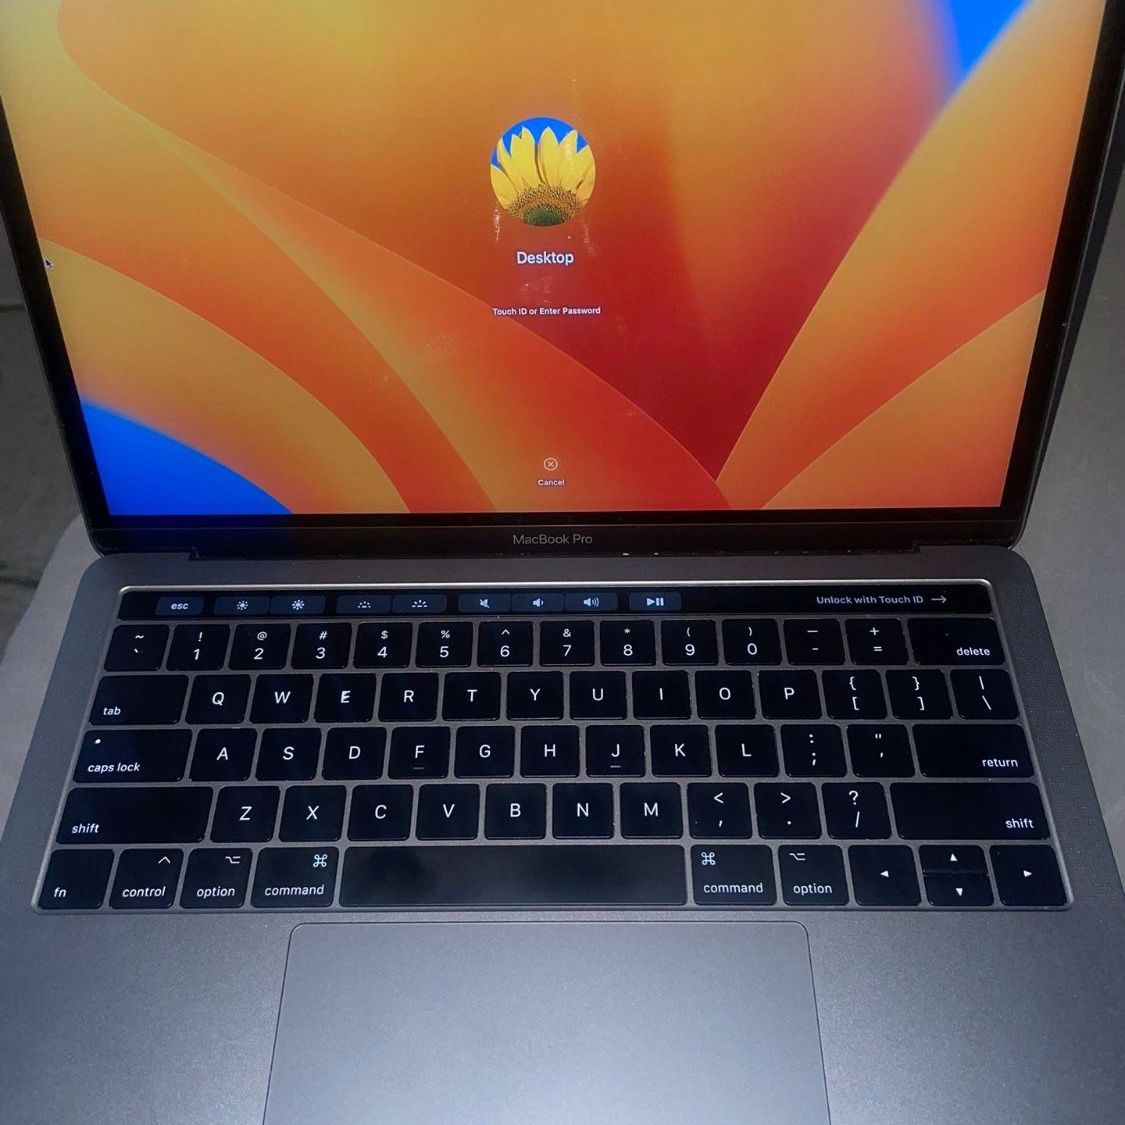 2017 MacBook Pro 13inch i7 Touchbar